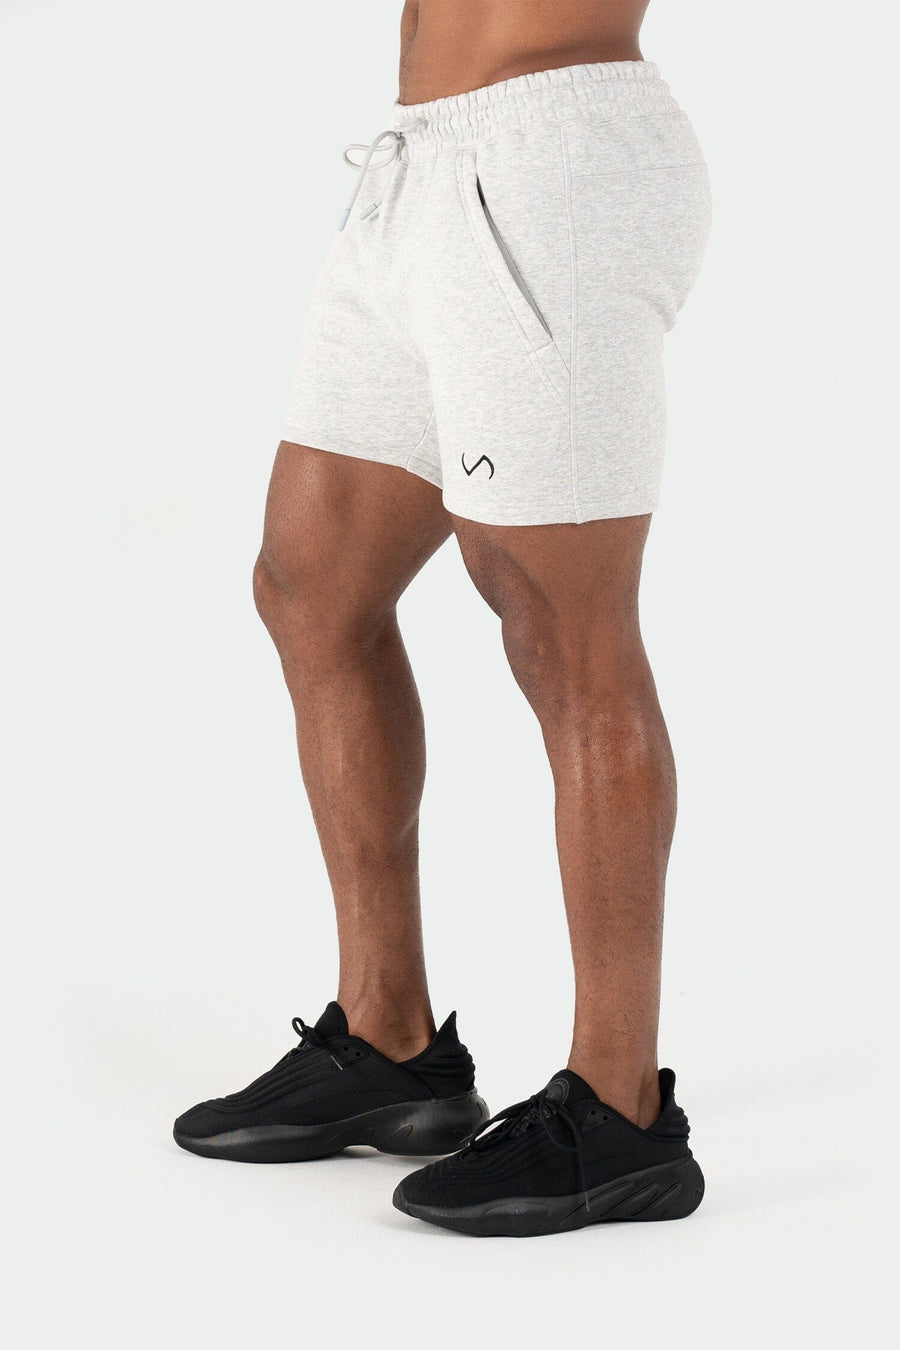 TLF Pivotal 6" Fleece Shorts – Men’s Gym Shorts - 6 Inch Inseam Men's Shorts – Gray - White - 4